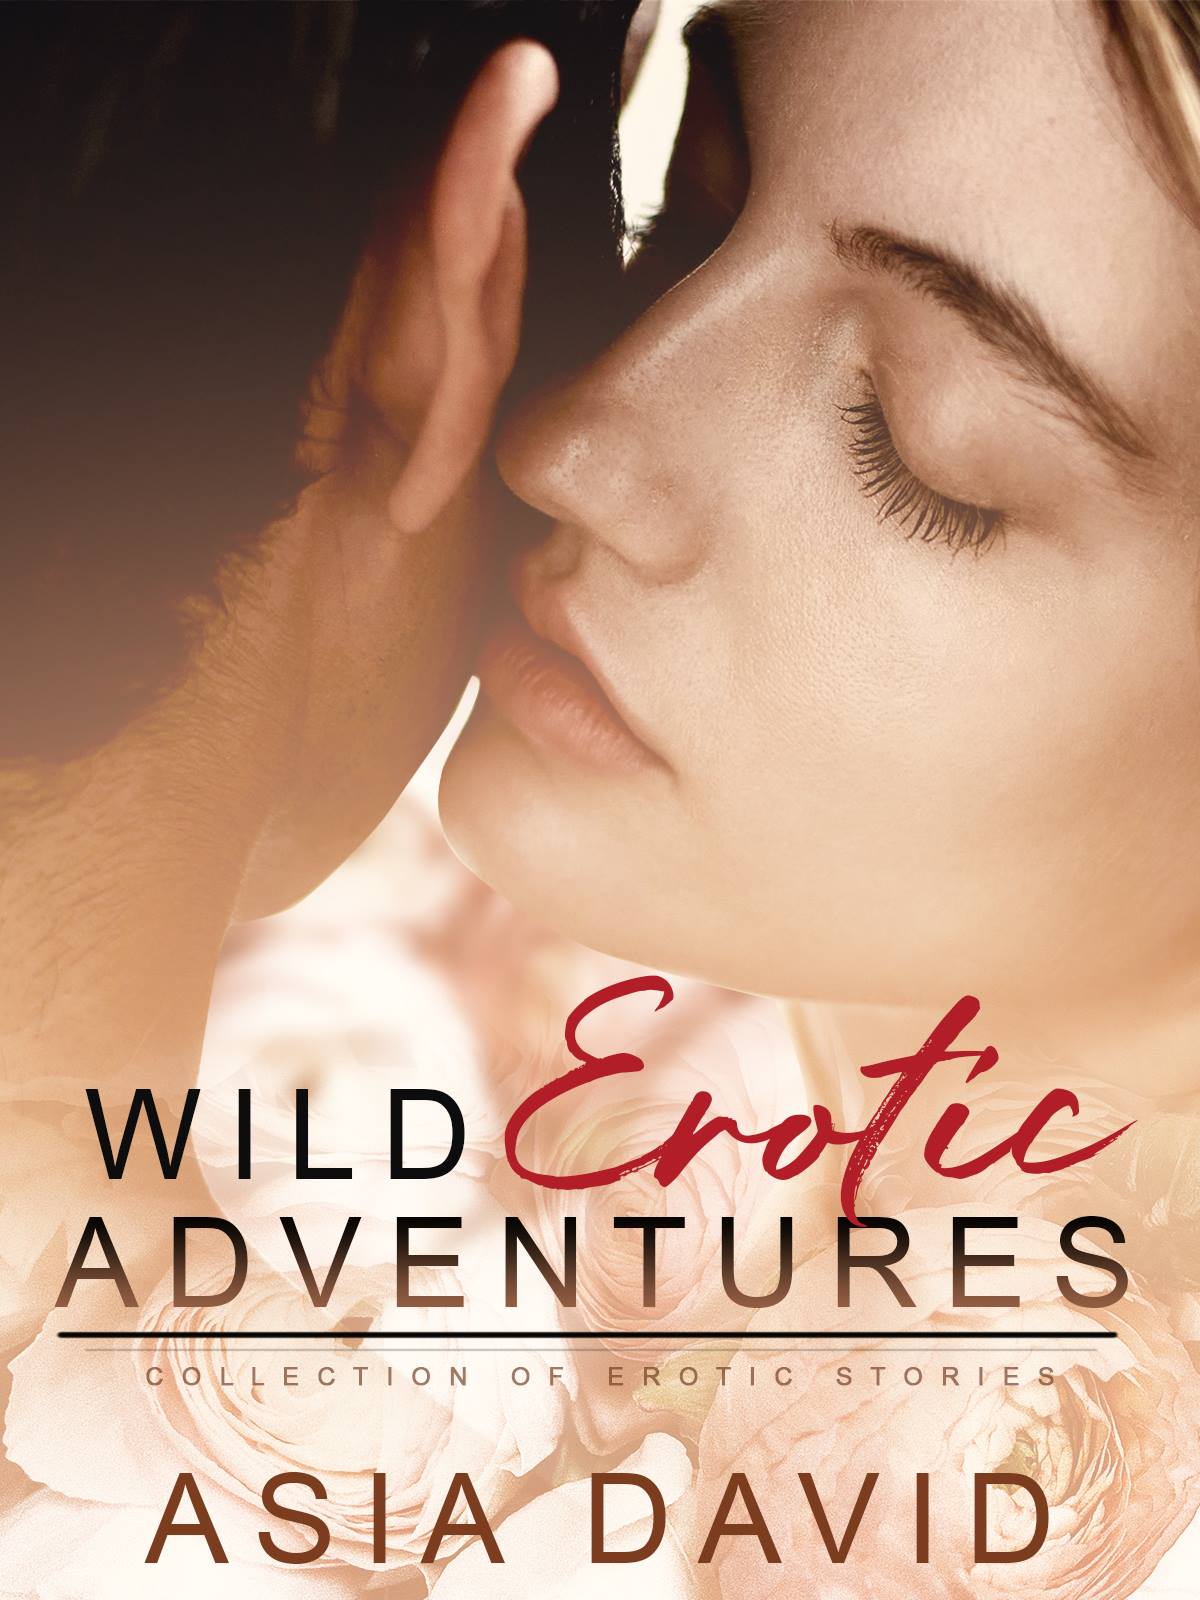 The erotic adventure of